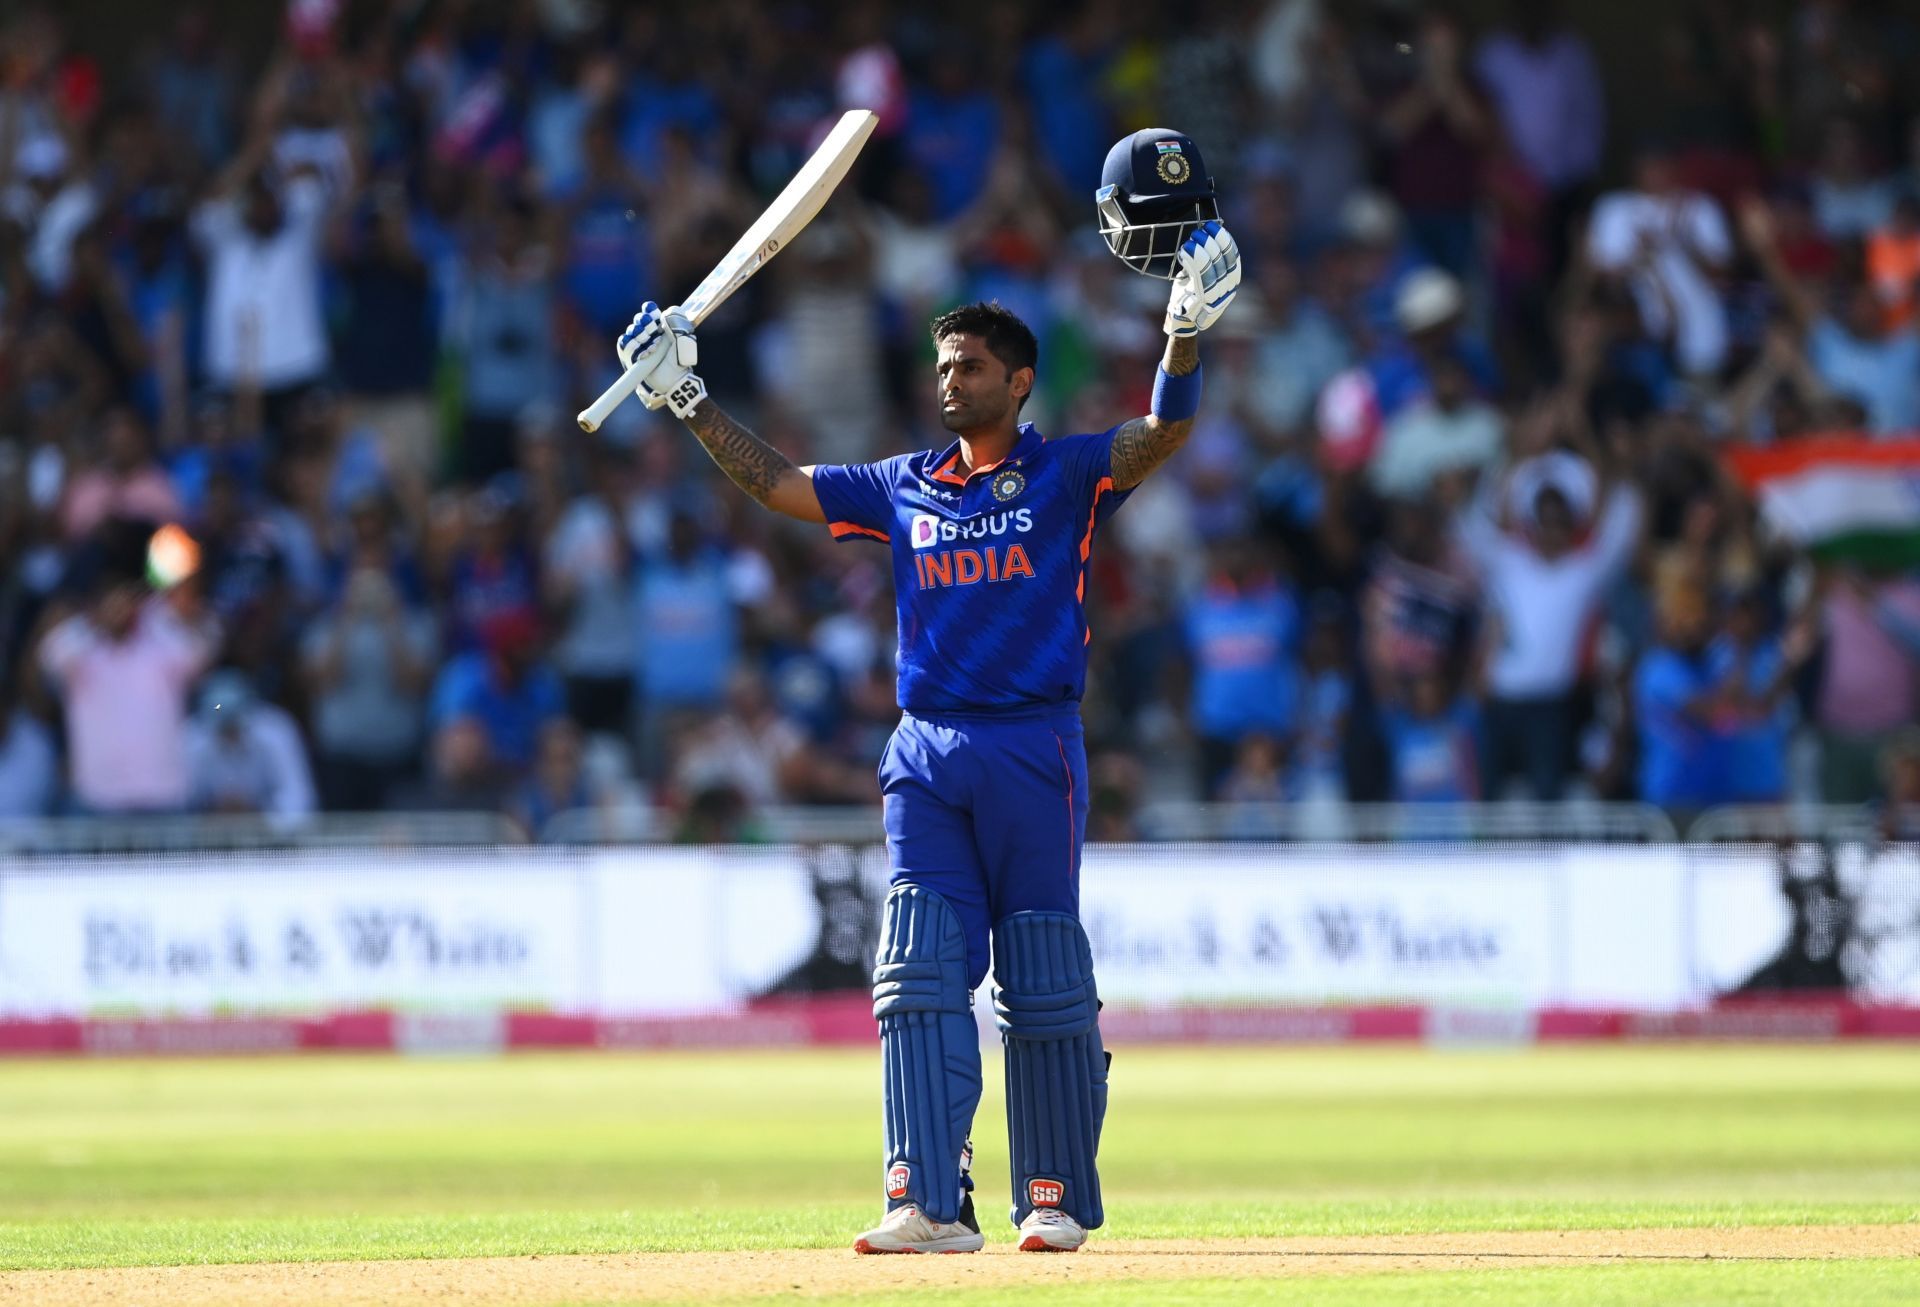 Suryakumar Yadav raises his bat after a hundred. (Credits: Getty)